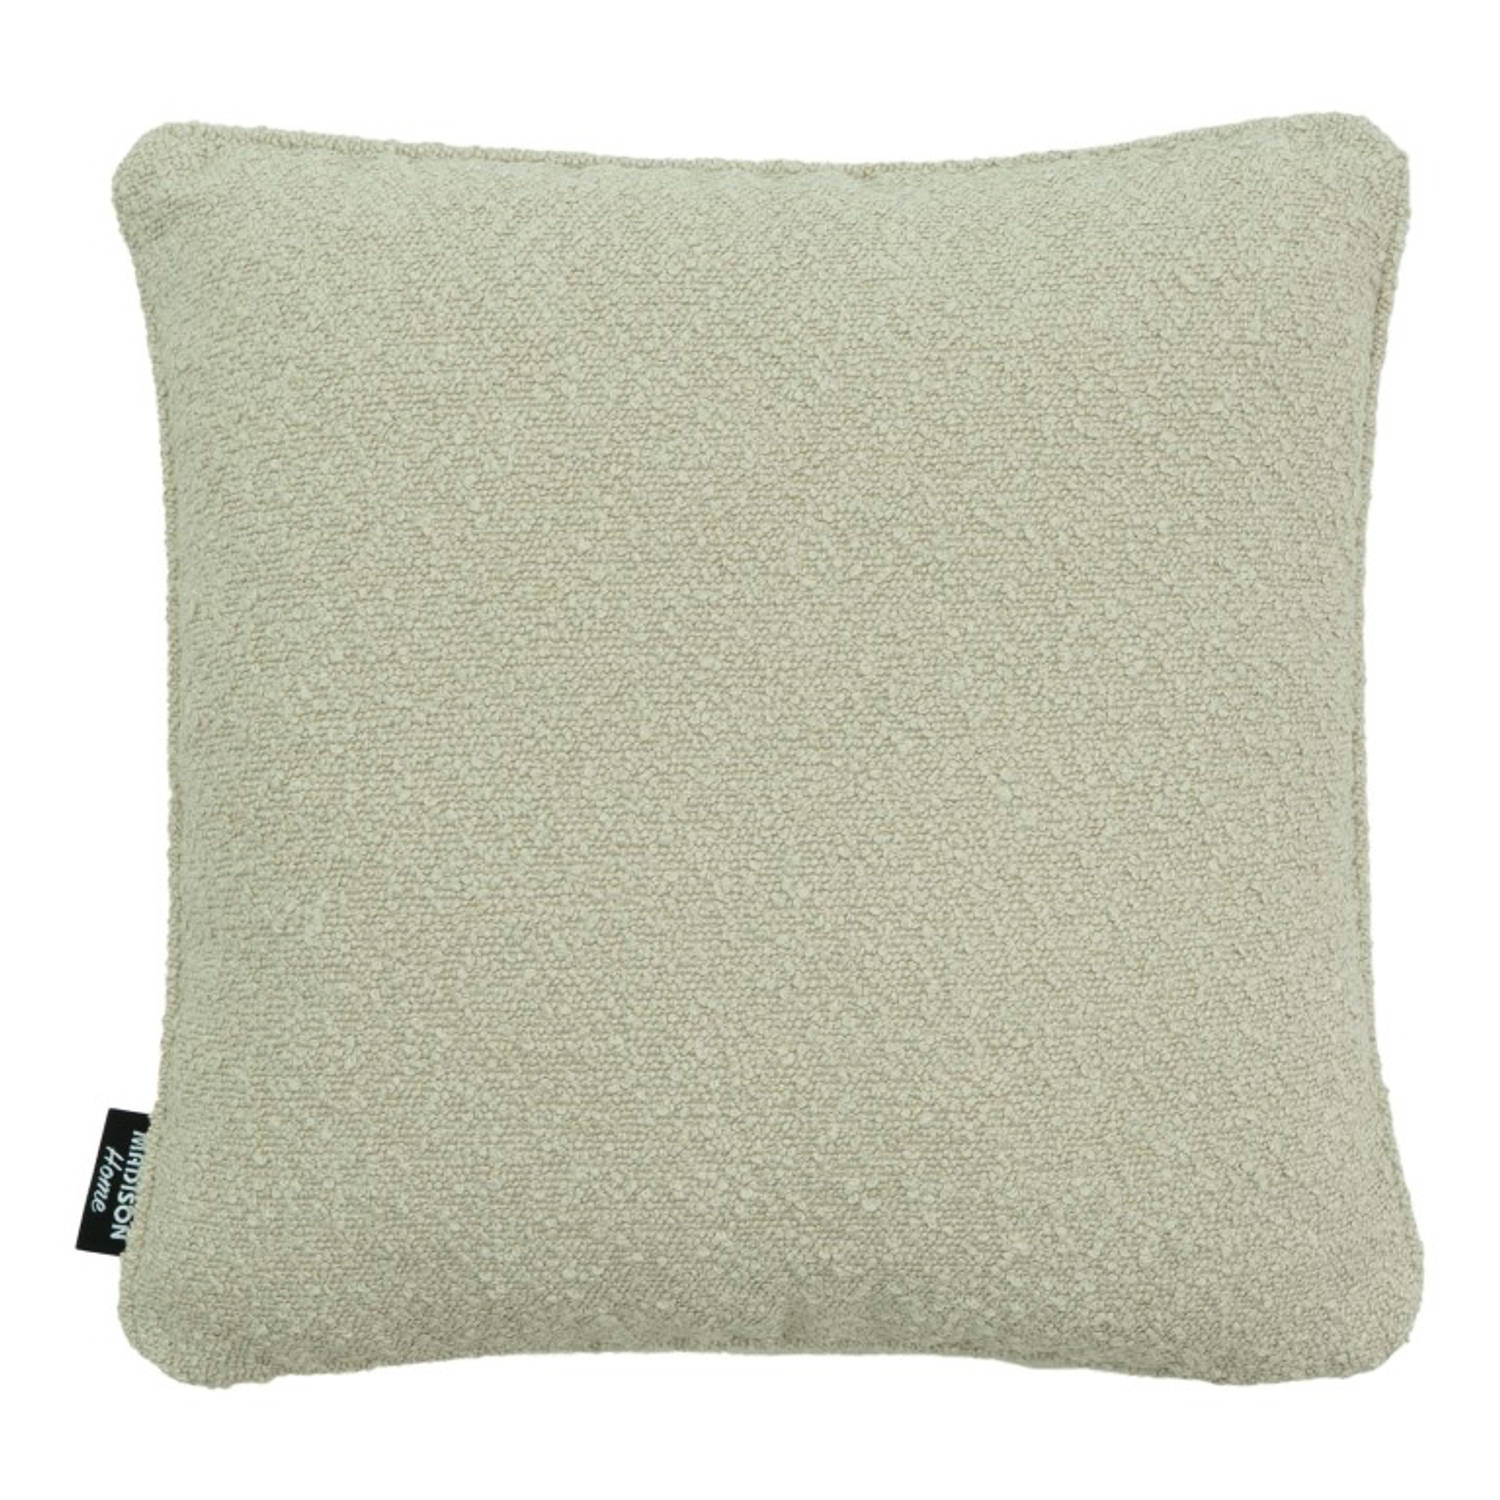 Decorative cushion Adria natural 45x45